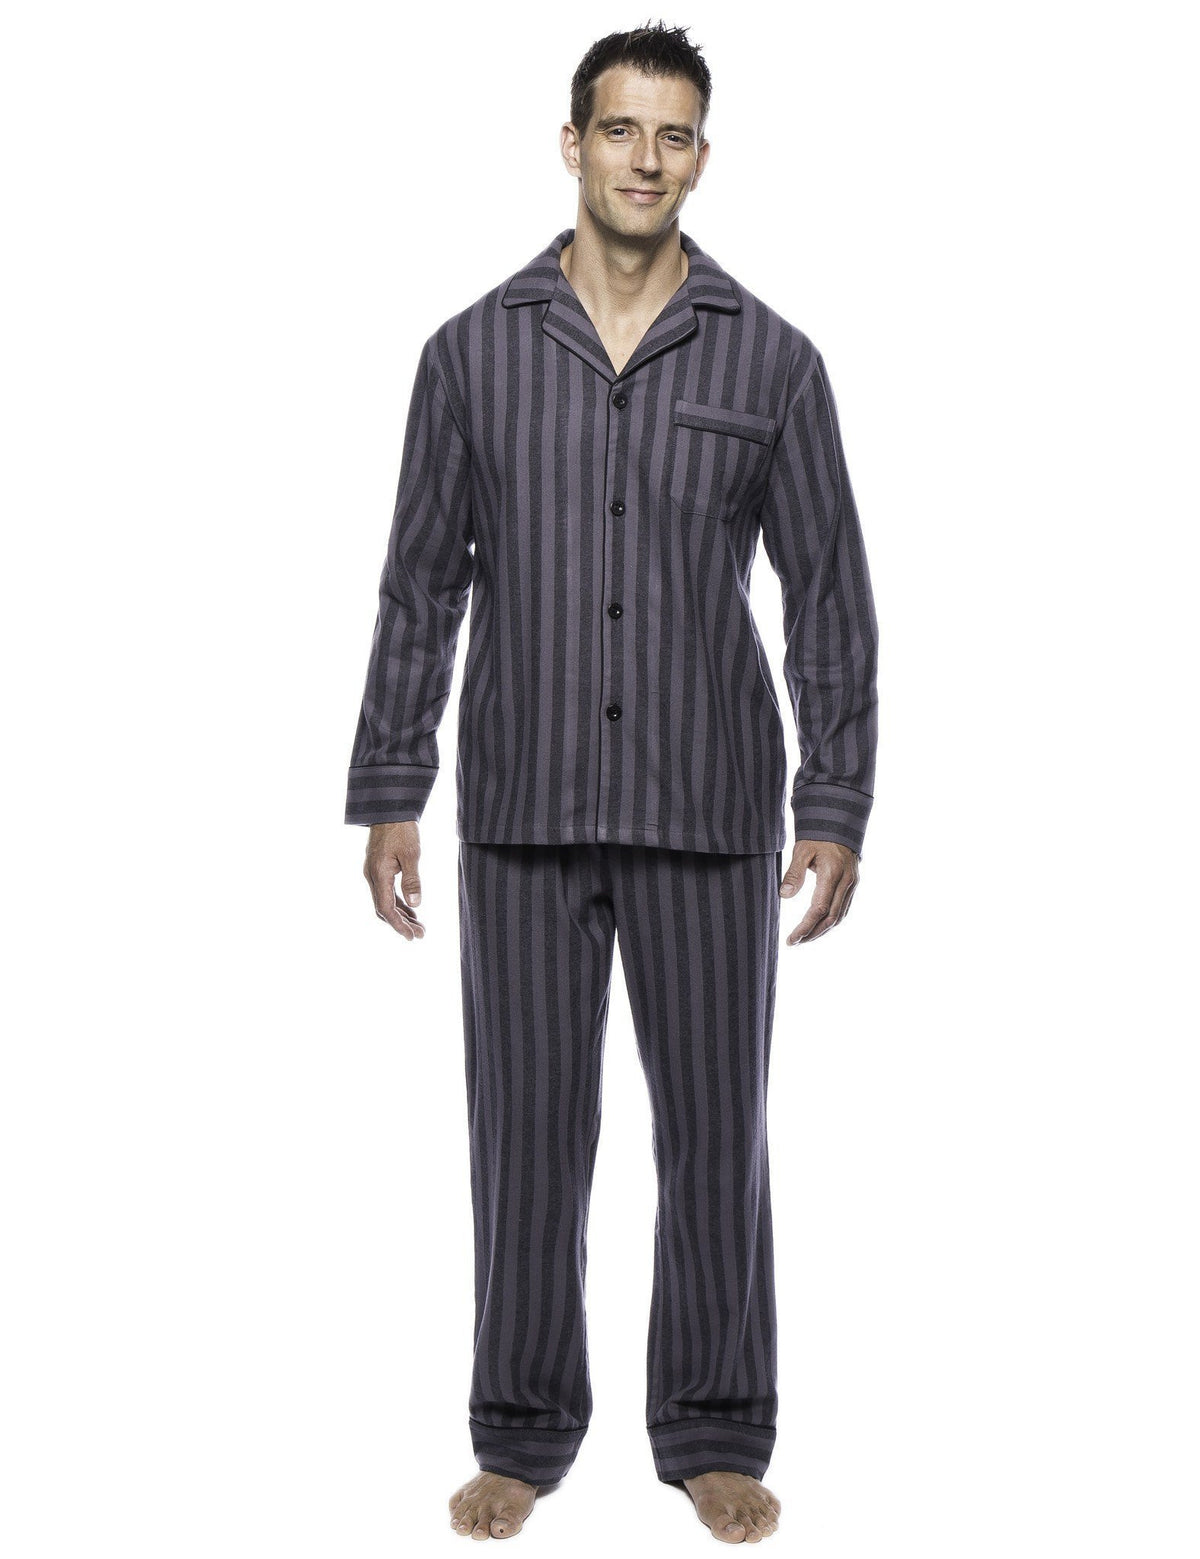 Box Packaged Men's Premium 100% Cotton Flannel Pajama Sleepwear Set - Stripes Black/Grey